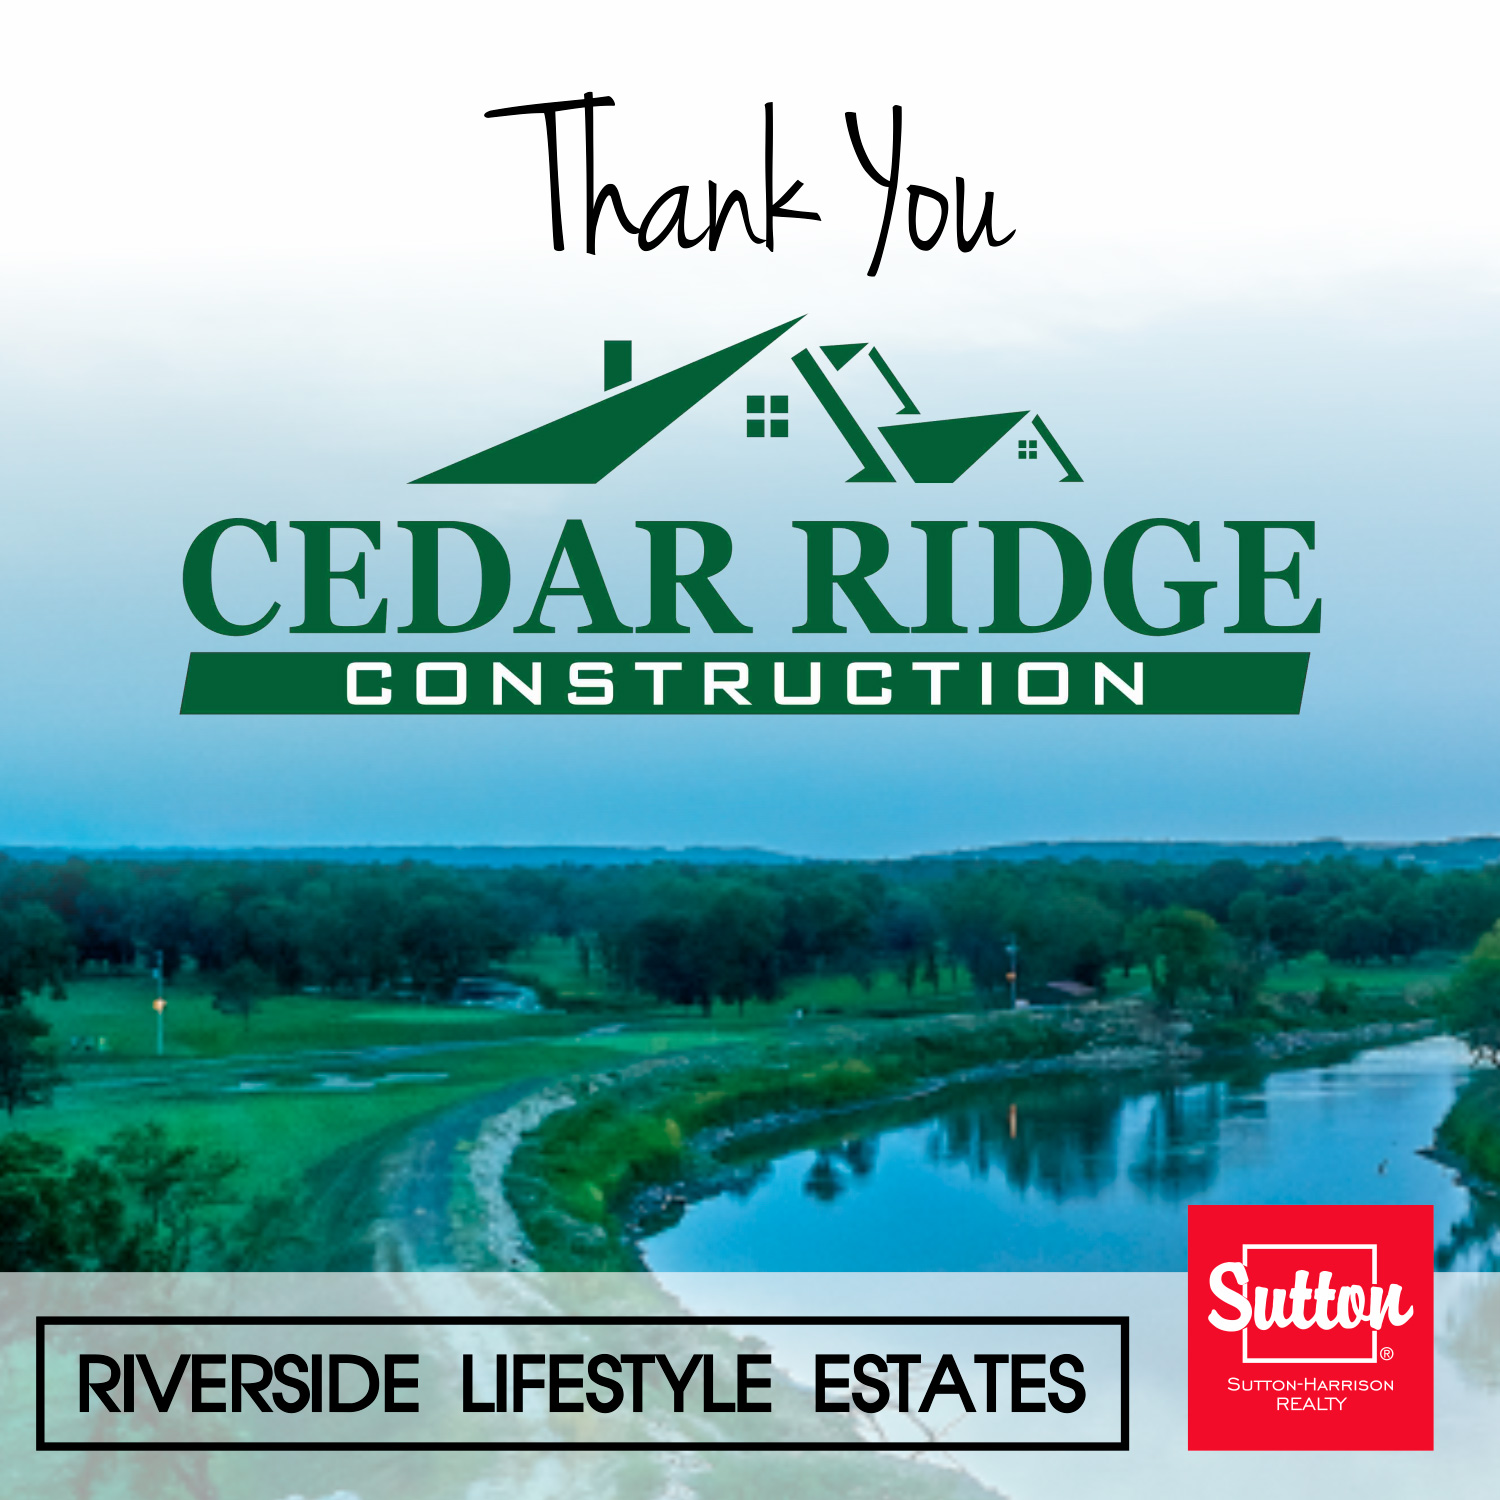 Image - Cedar Ridge Construction